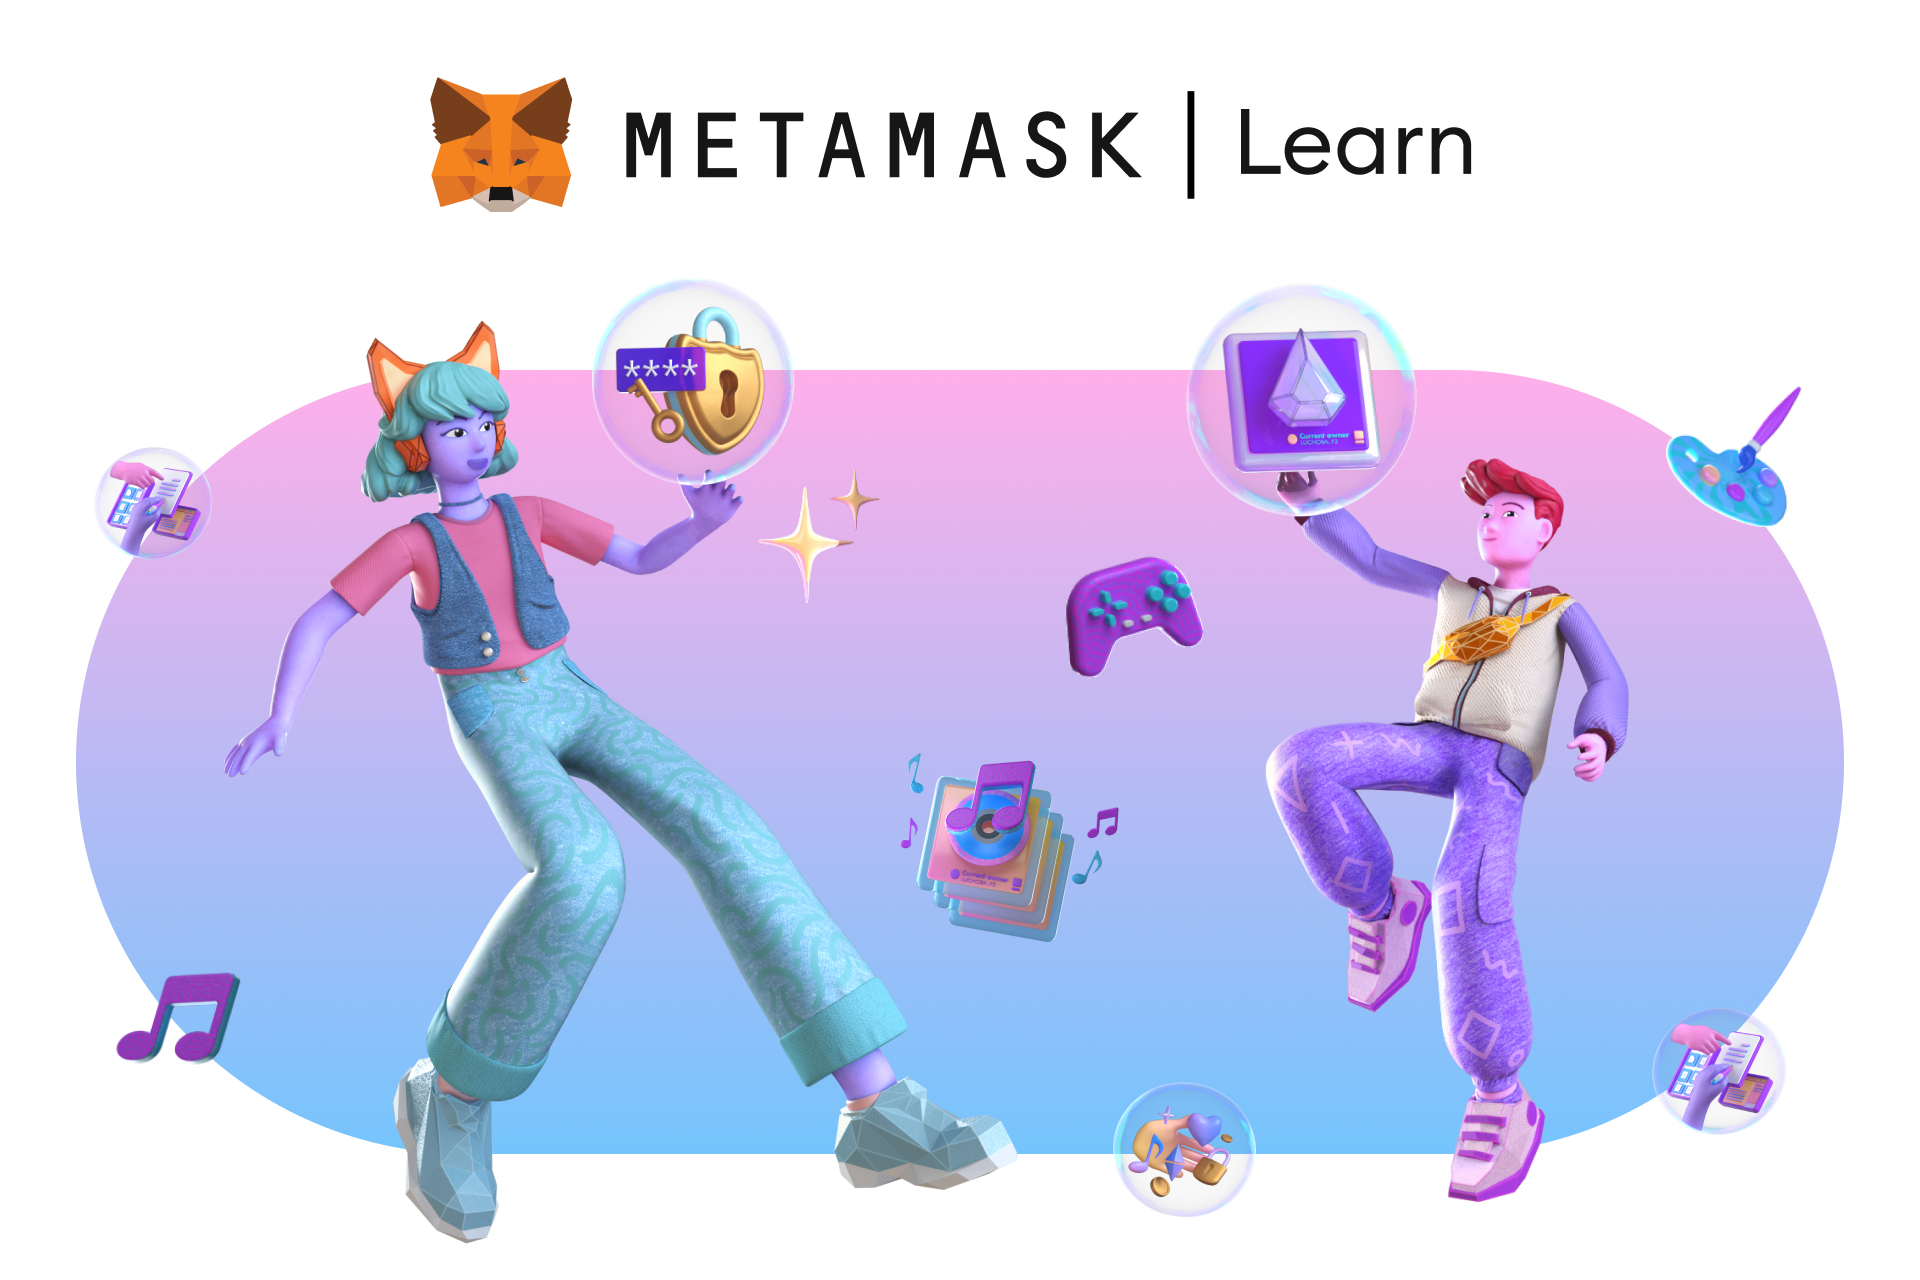 MetaMask Learn 线上学习平台，带您轻松进入Web3链百科